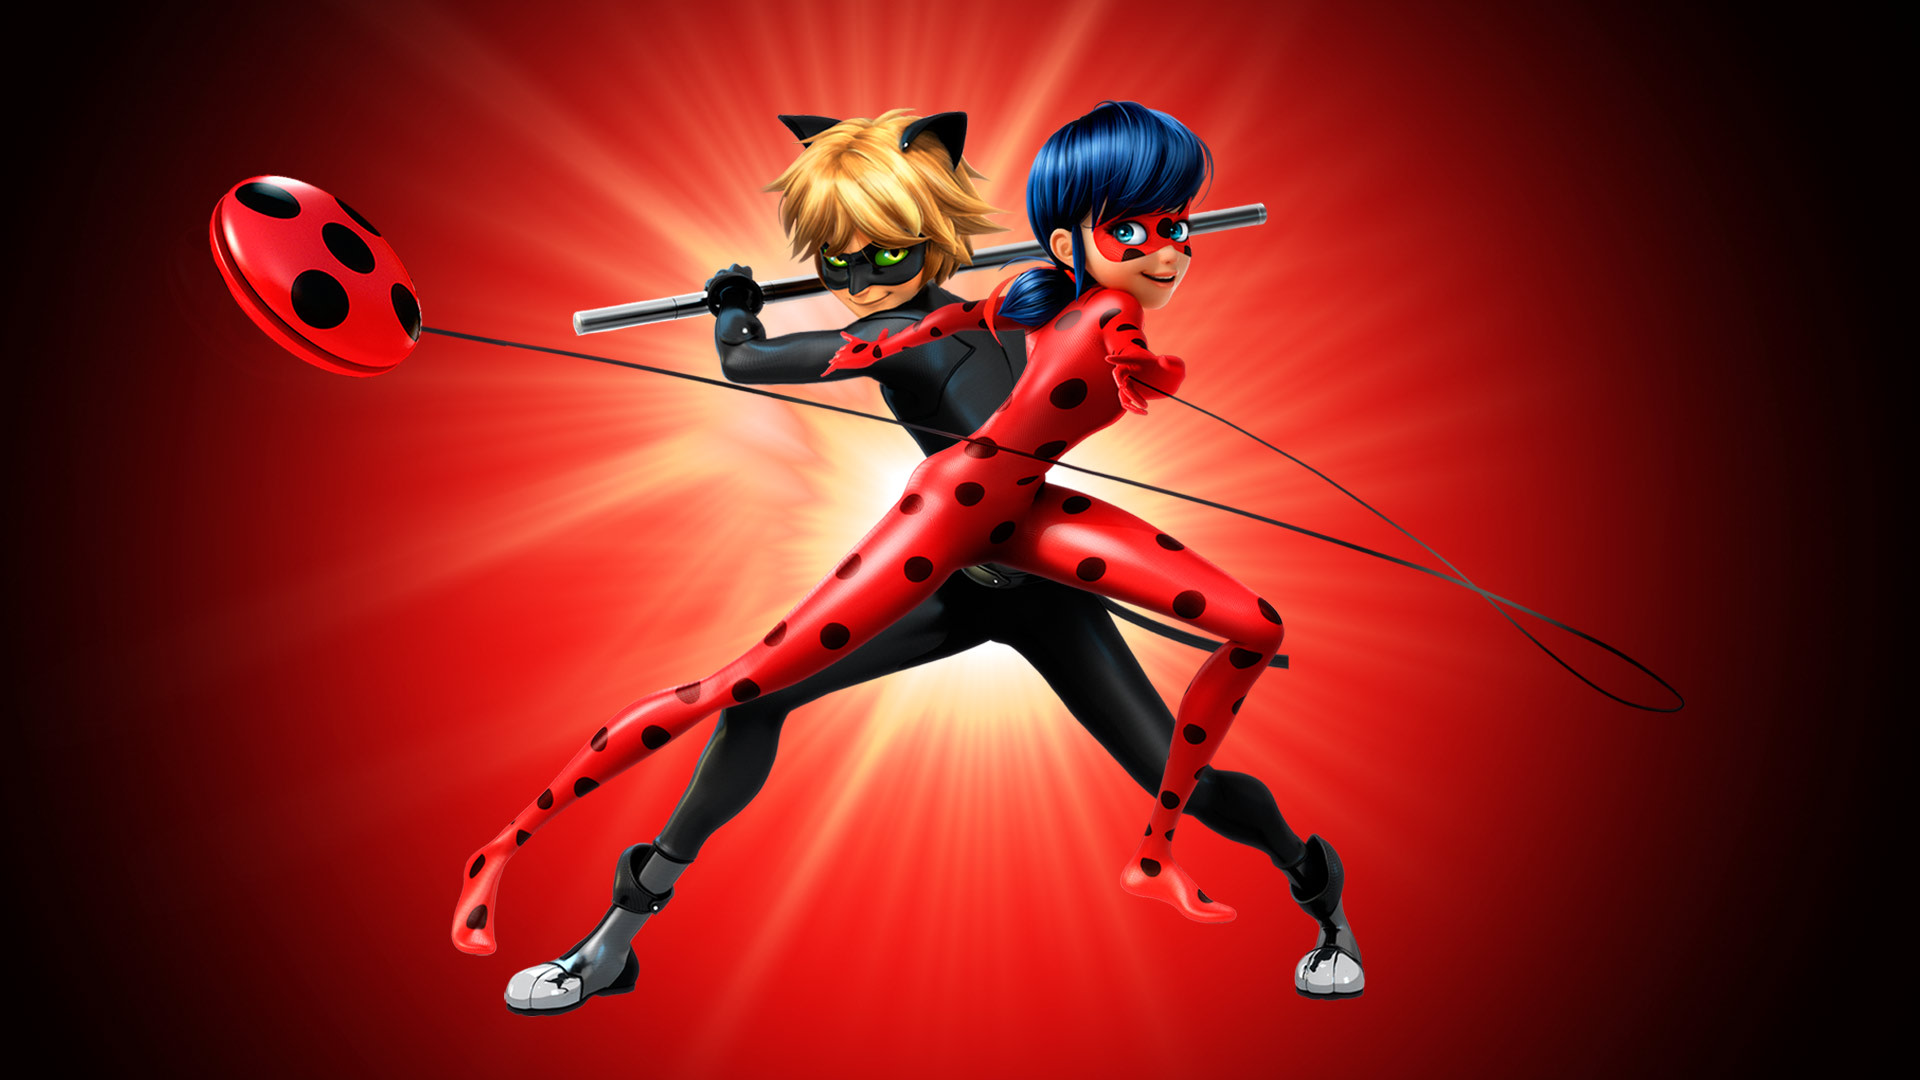 Miraculous Tales of Ladybug & Cat Noir - Disney+ Hotstar